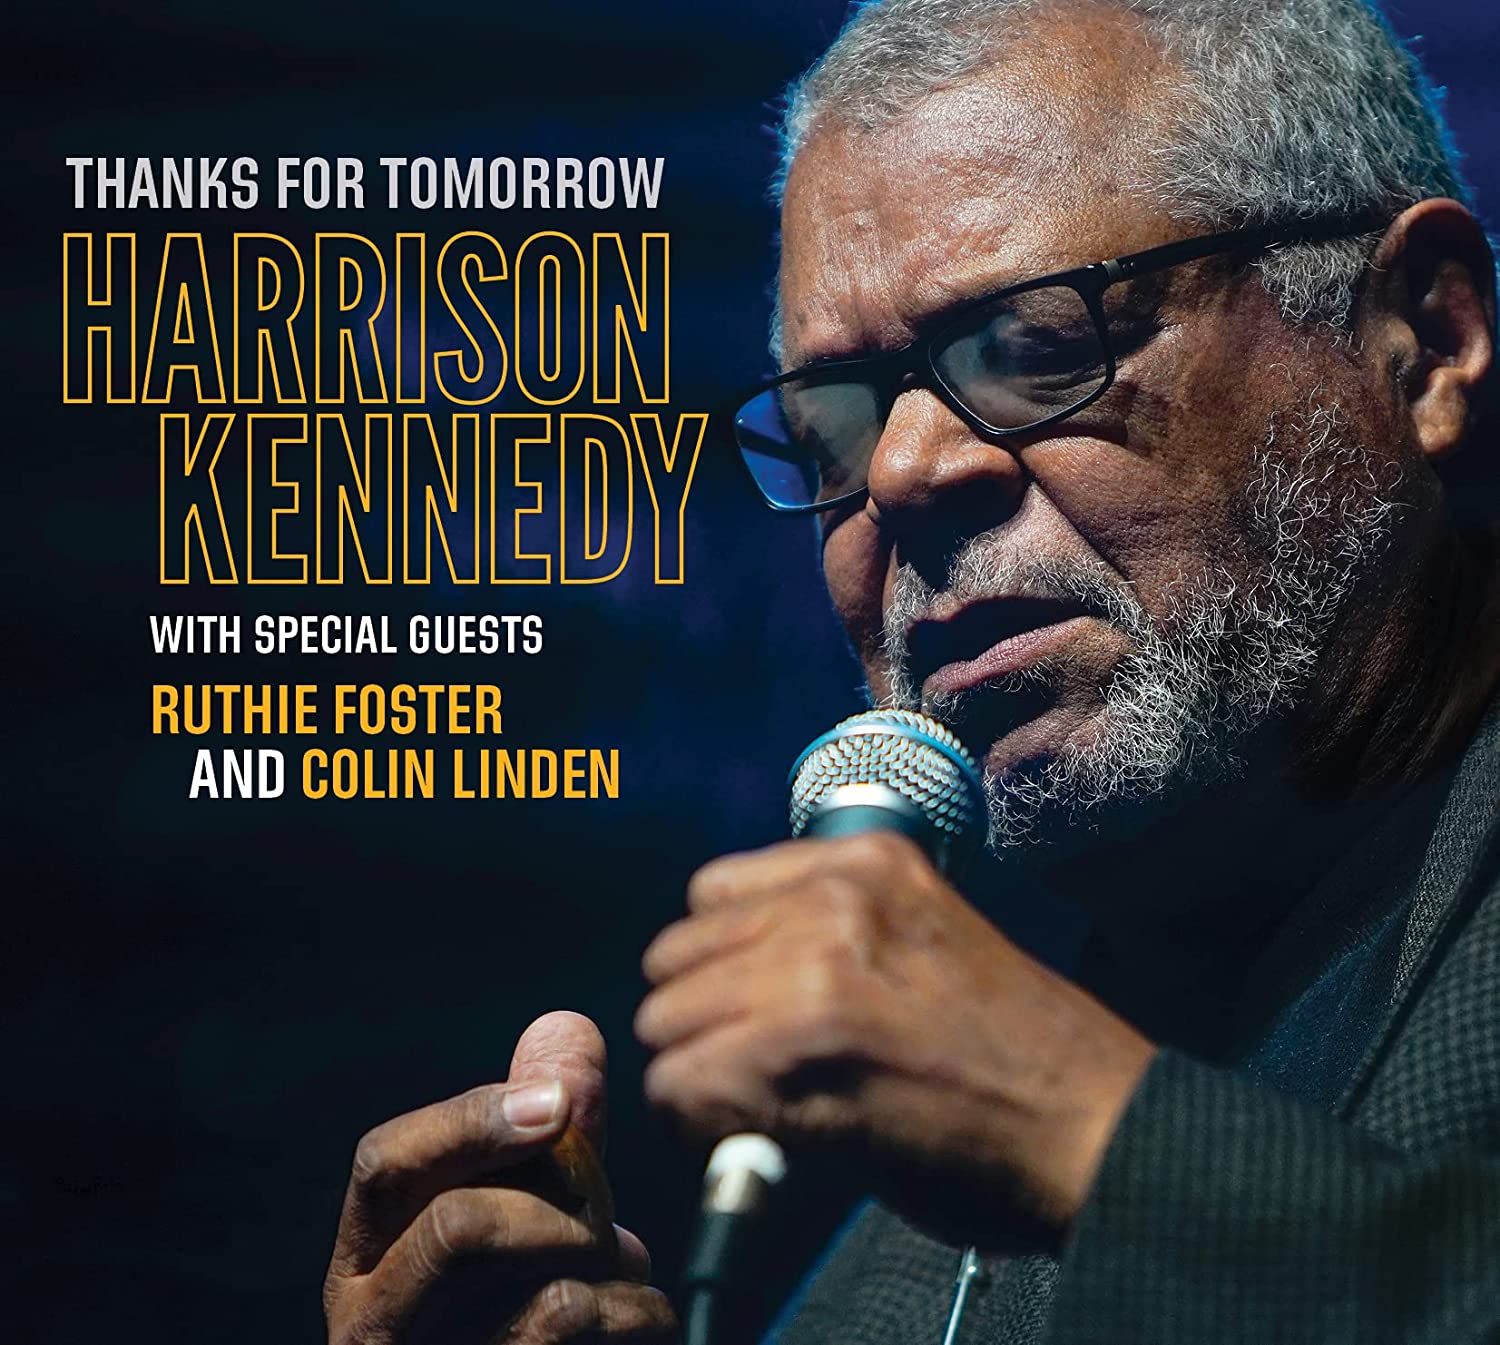 HARRISON KENNEDY - Thanks For Tomorrow